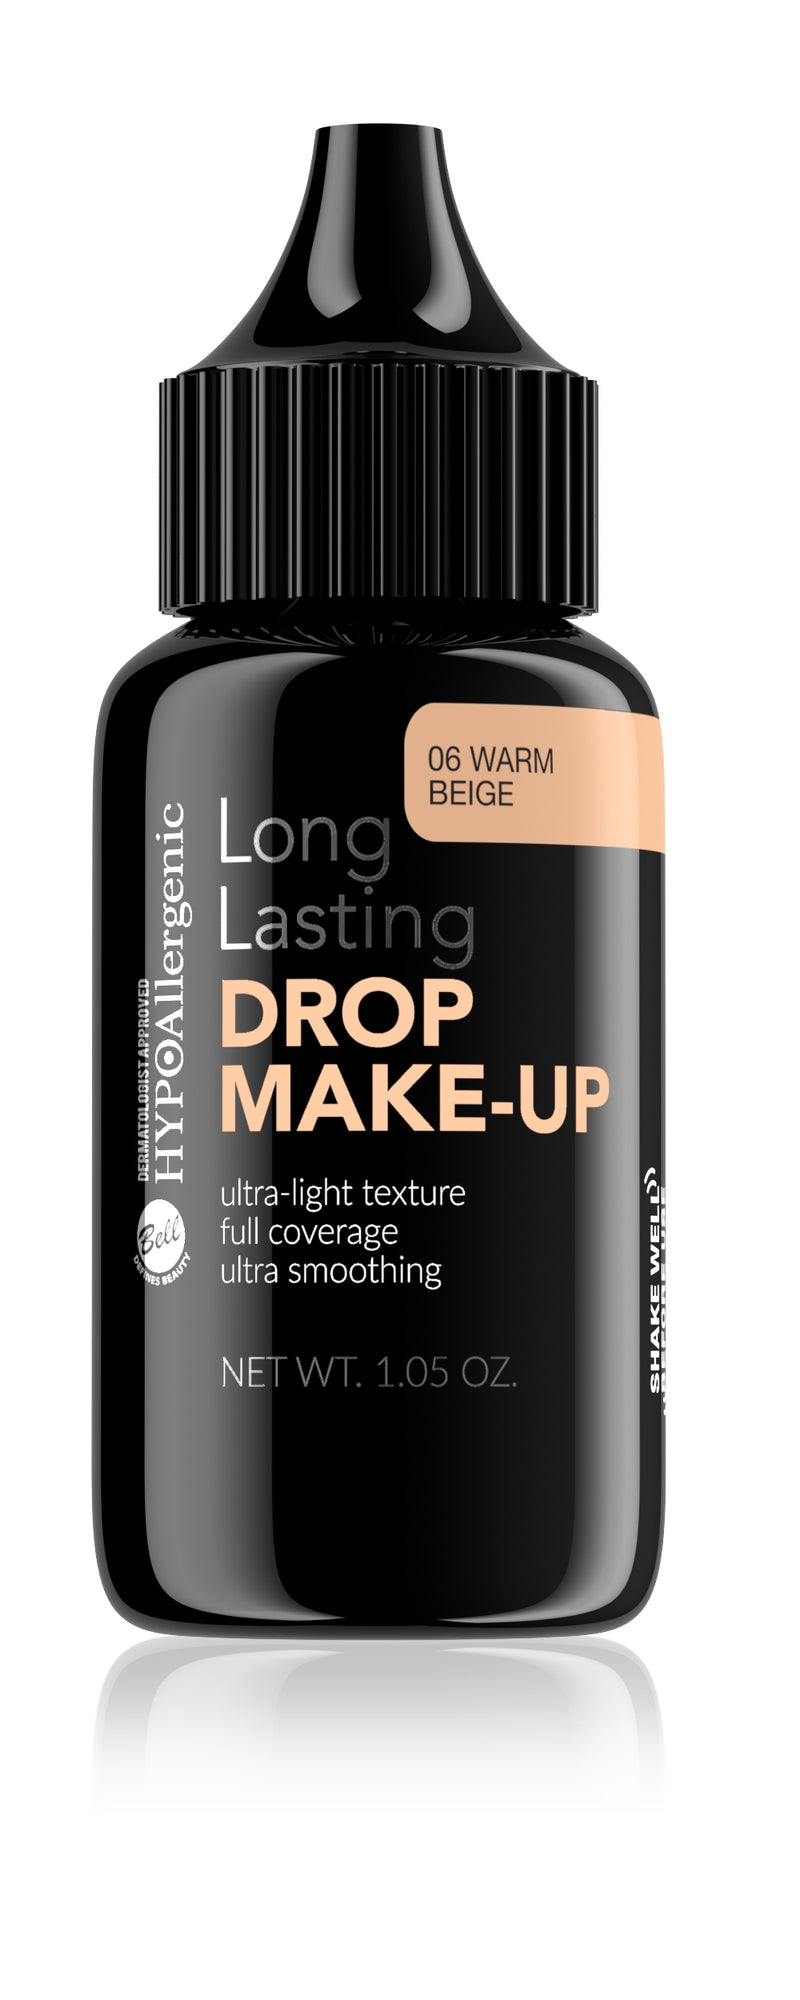 Skysta pudra Long Lasting Drop Make-up "Bell Hypoallergenic" 06, 30g